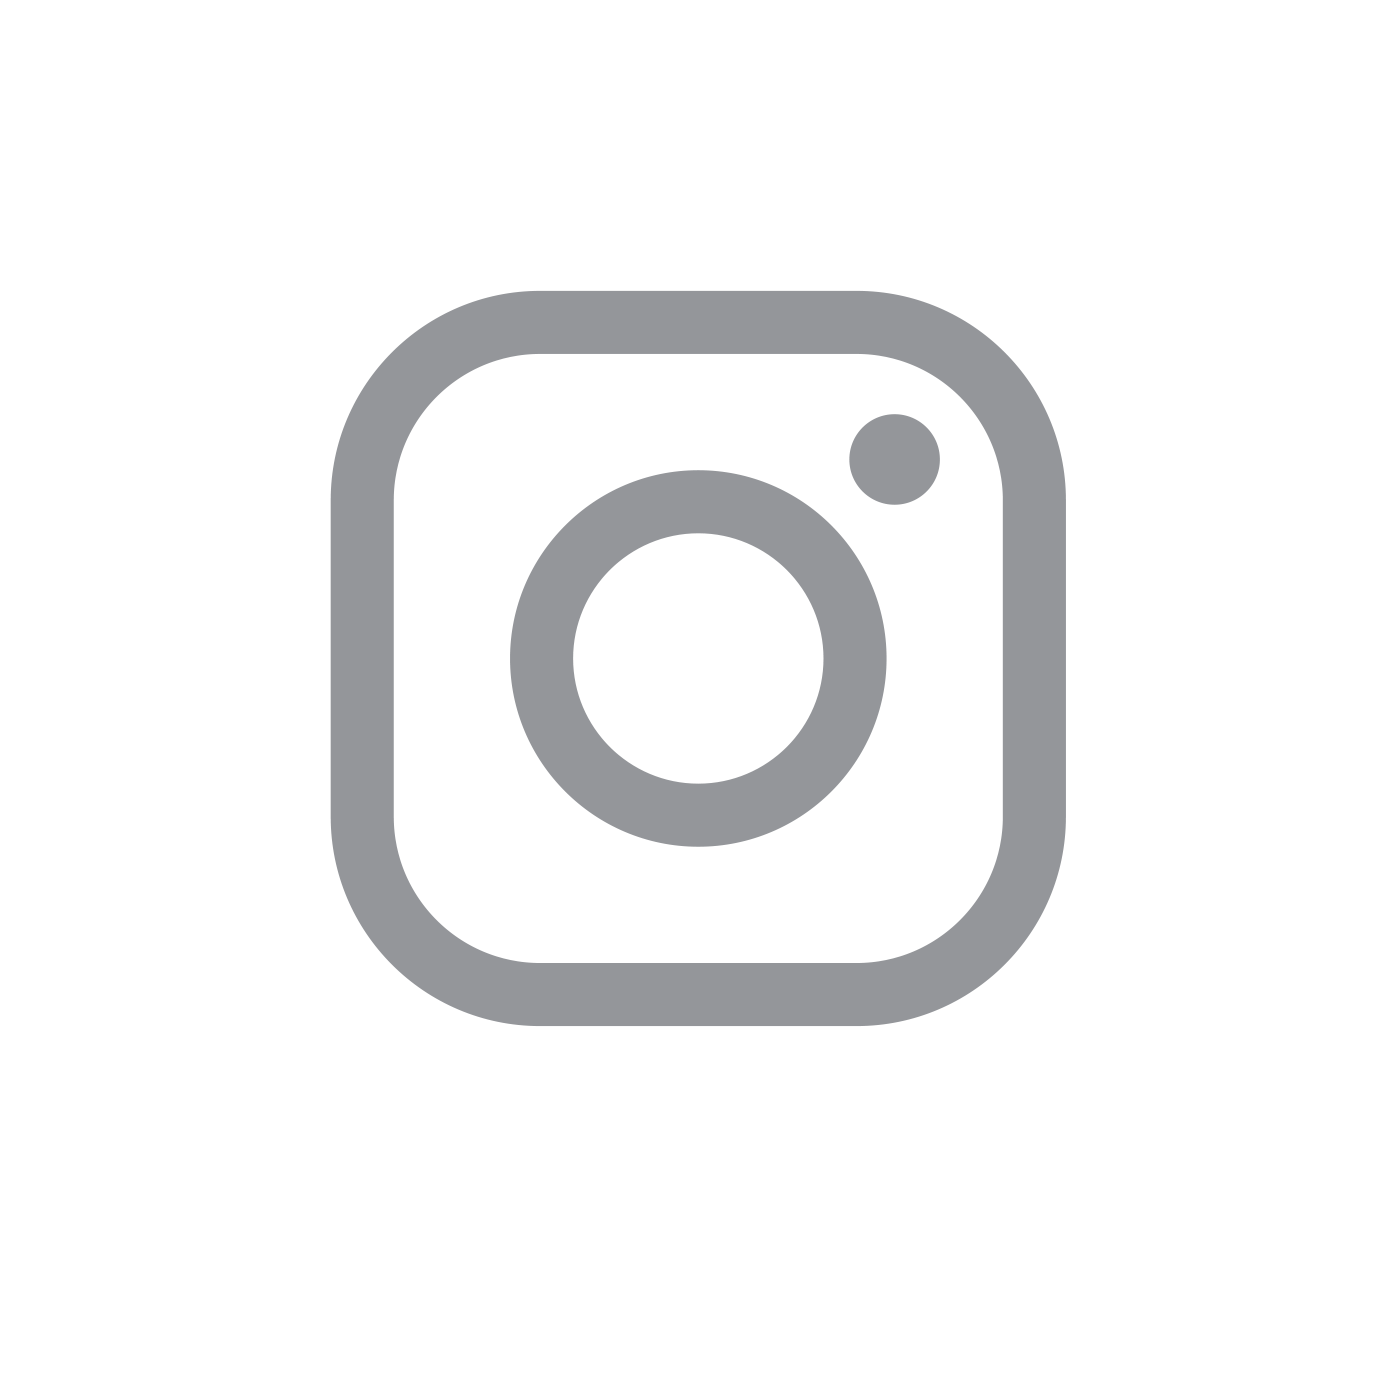 instagram logo for business cards png 3